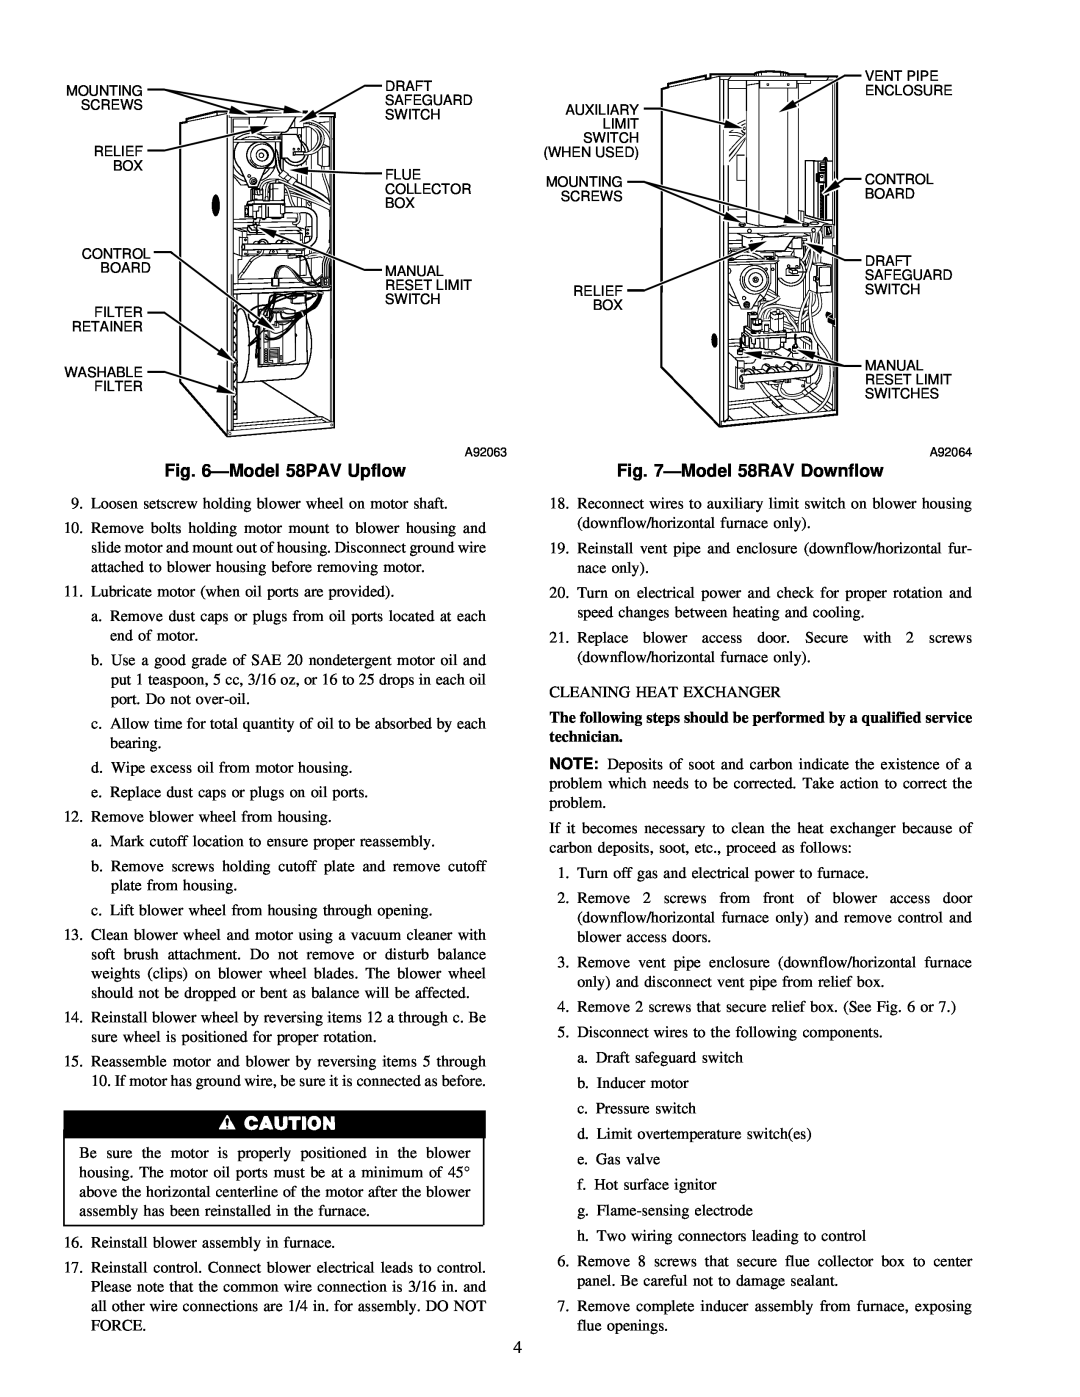 Carrier instruction manual ÐModel 58PAV Upflow, ÐModel 58RAV Downflow 